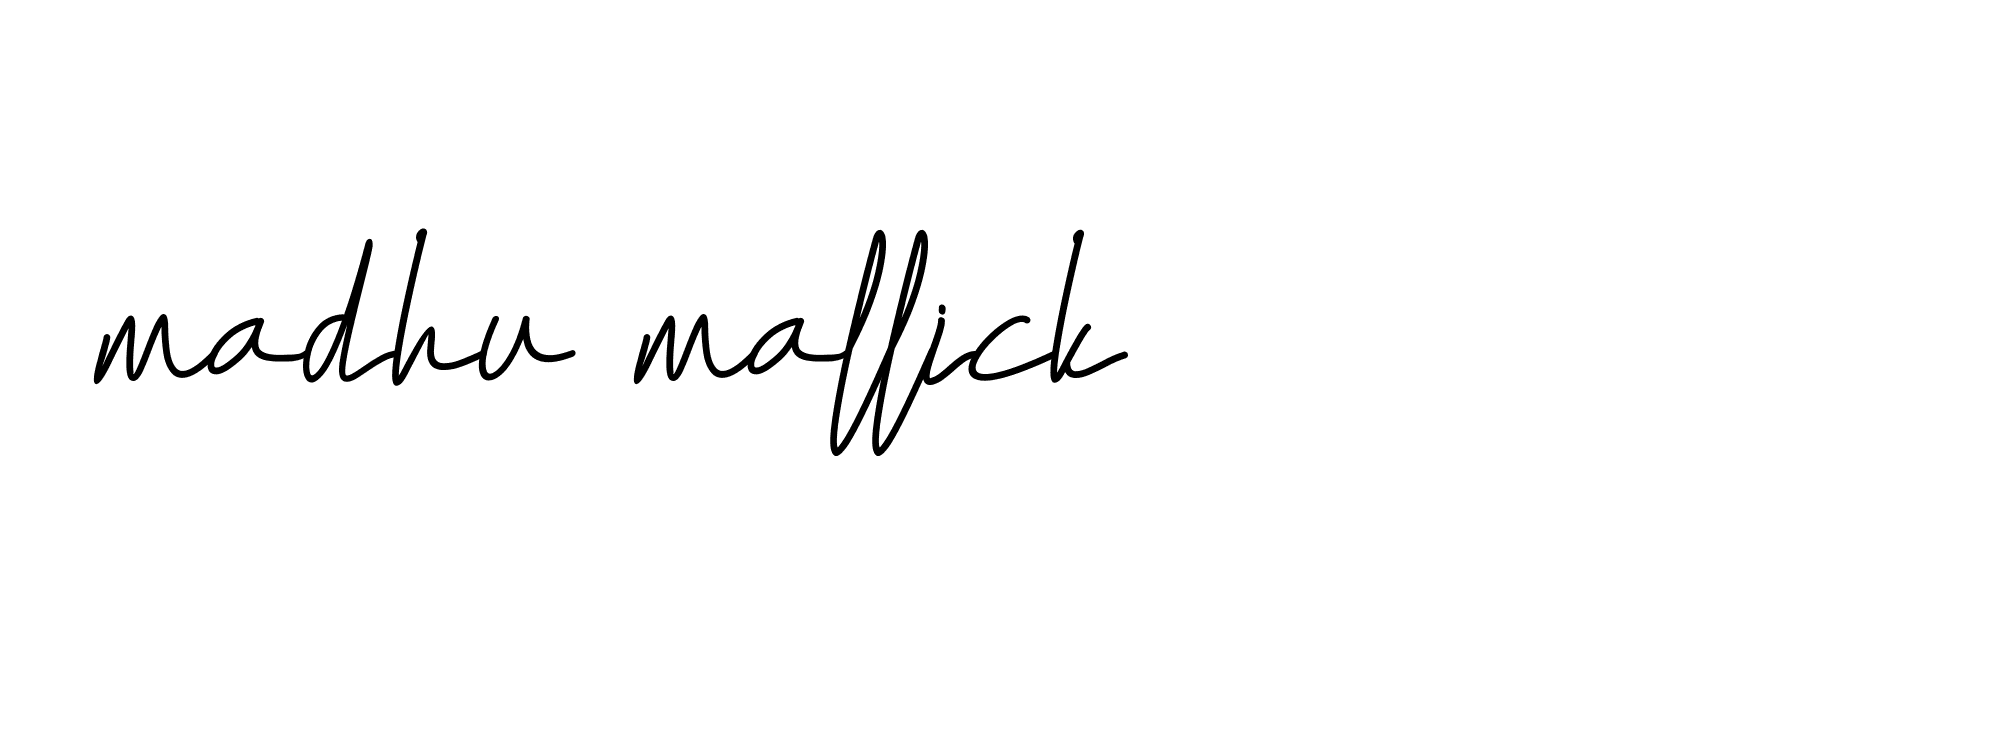 92+ Madhu-mallick- Name Signature Style Ideas | FREE ESignature